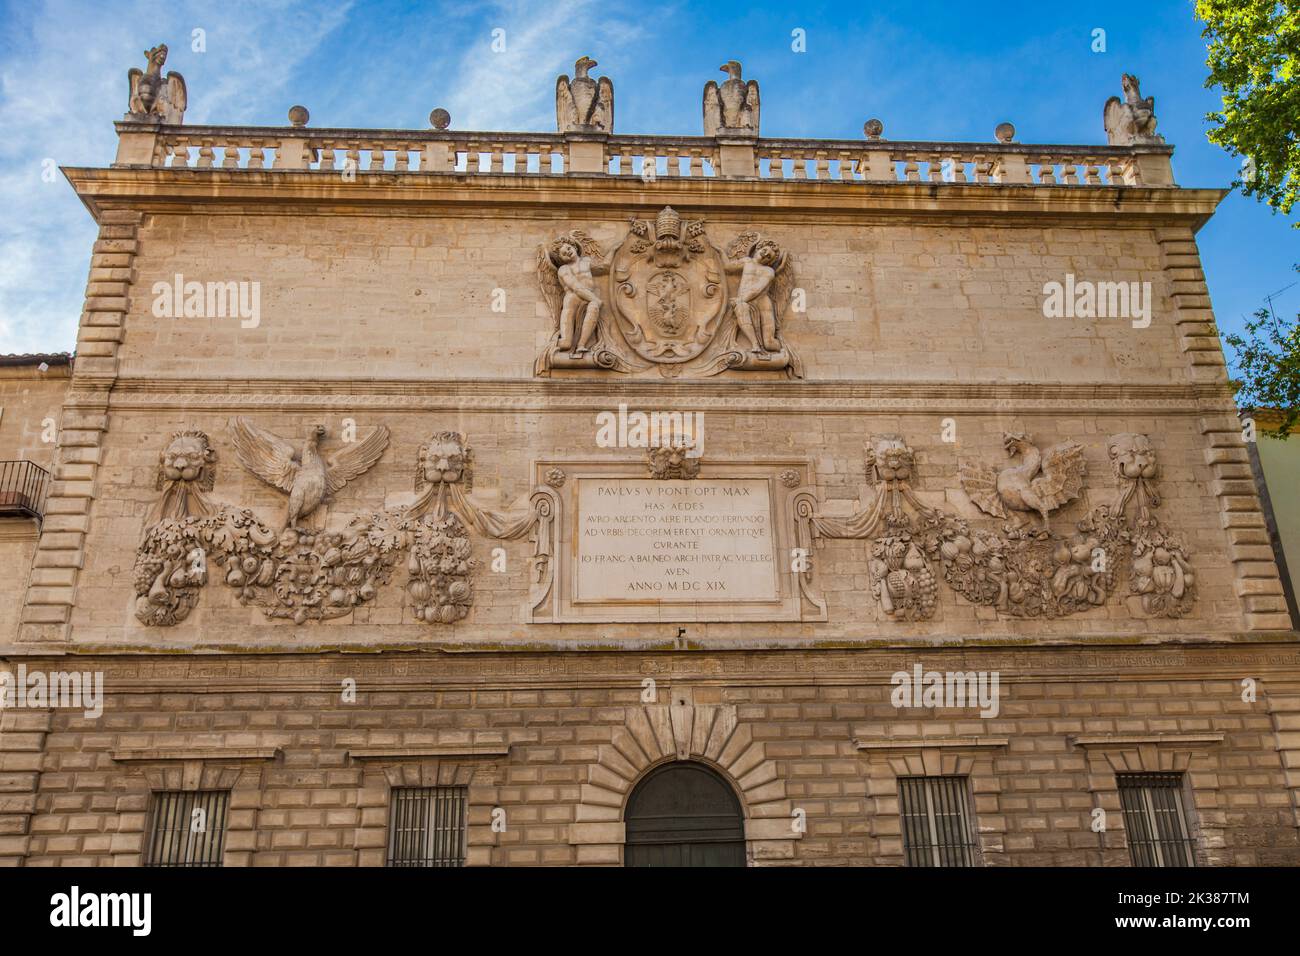 Facade of Hotel des Monnaies in Avignon, France, built in 1619 Stock Photo